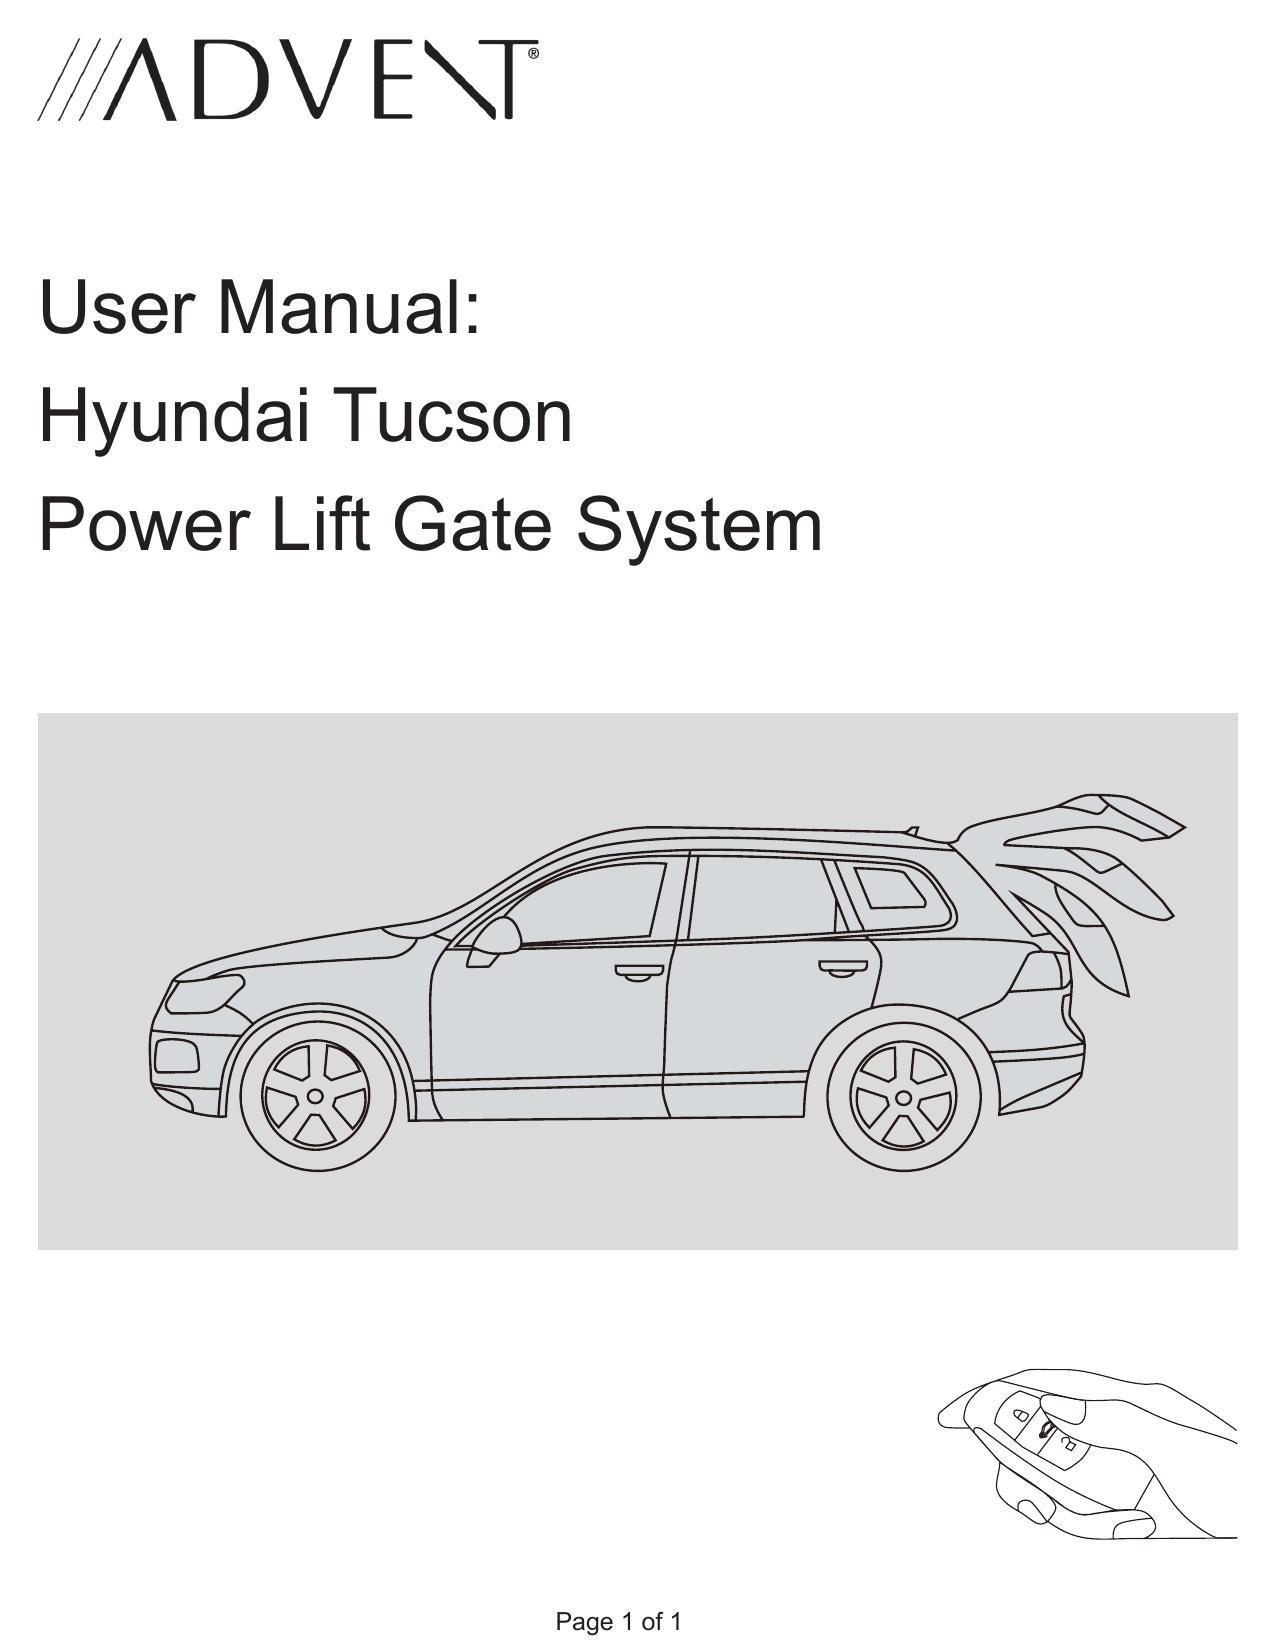 user-manual-hyundai-tucson-power-lift-gate-system.pdf